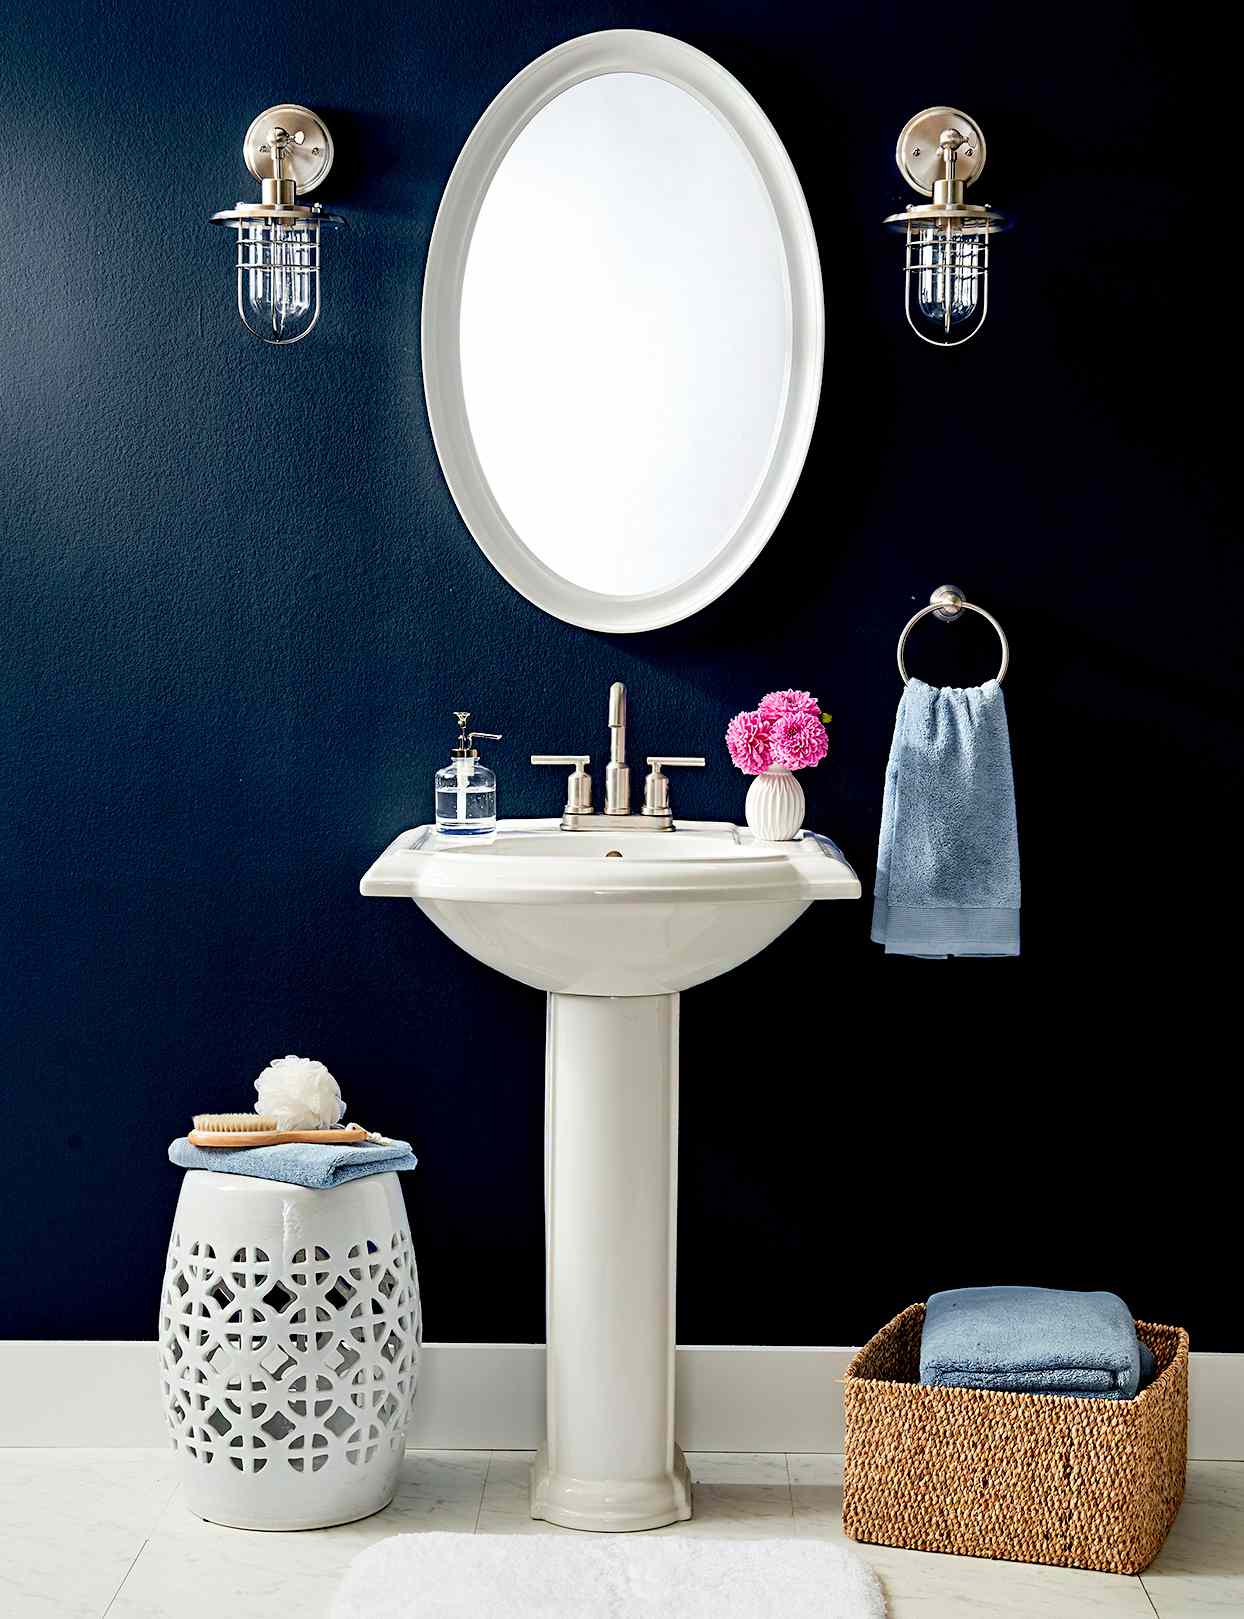 DIY Bathroom Vanity: Convert a Dresser into a Bathroom Sink | Better ...